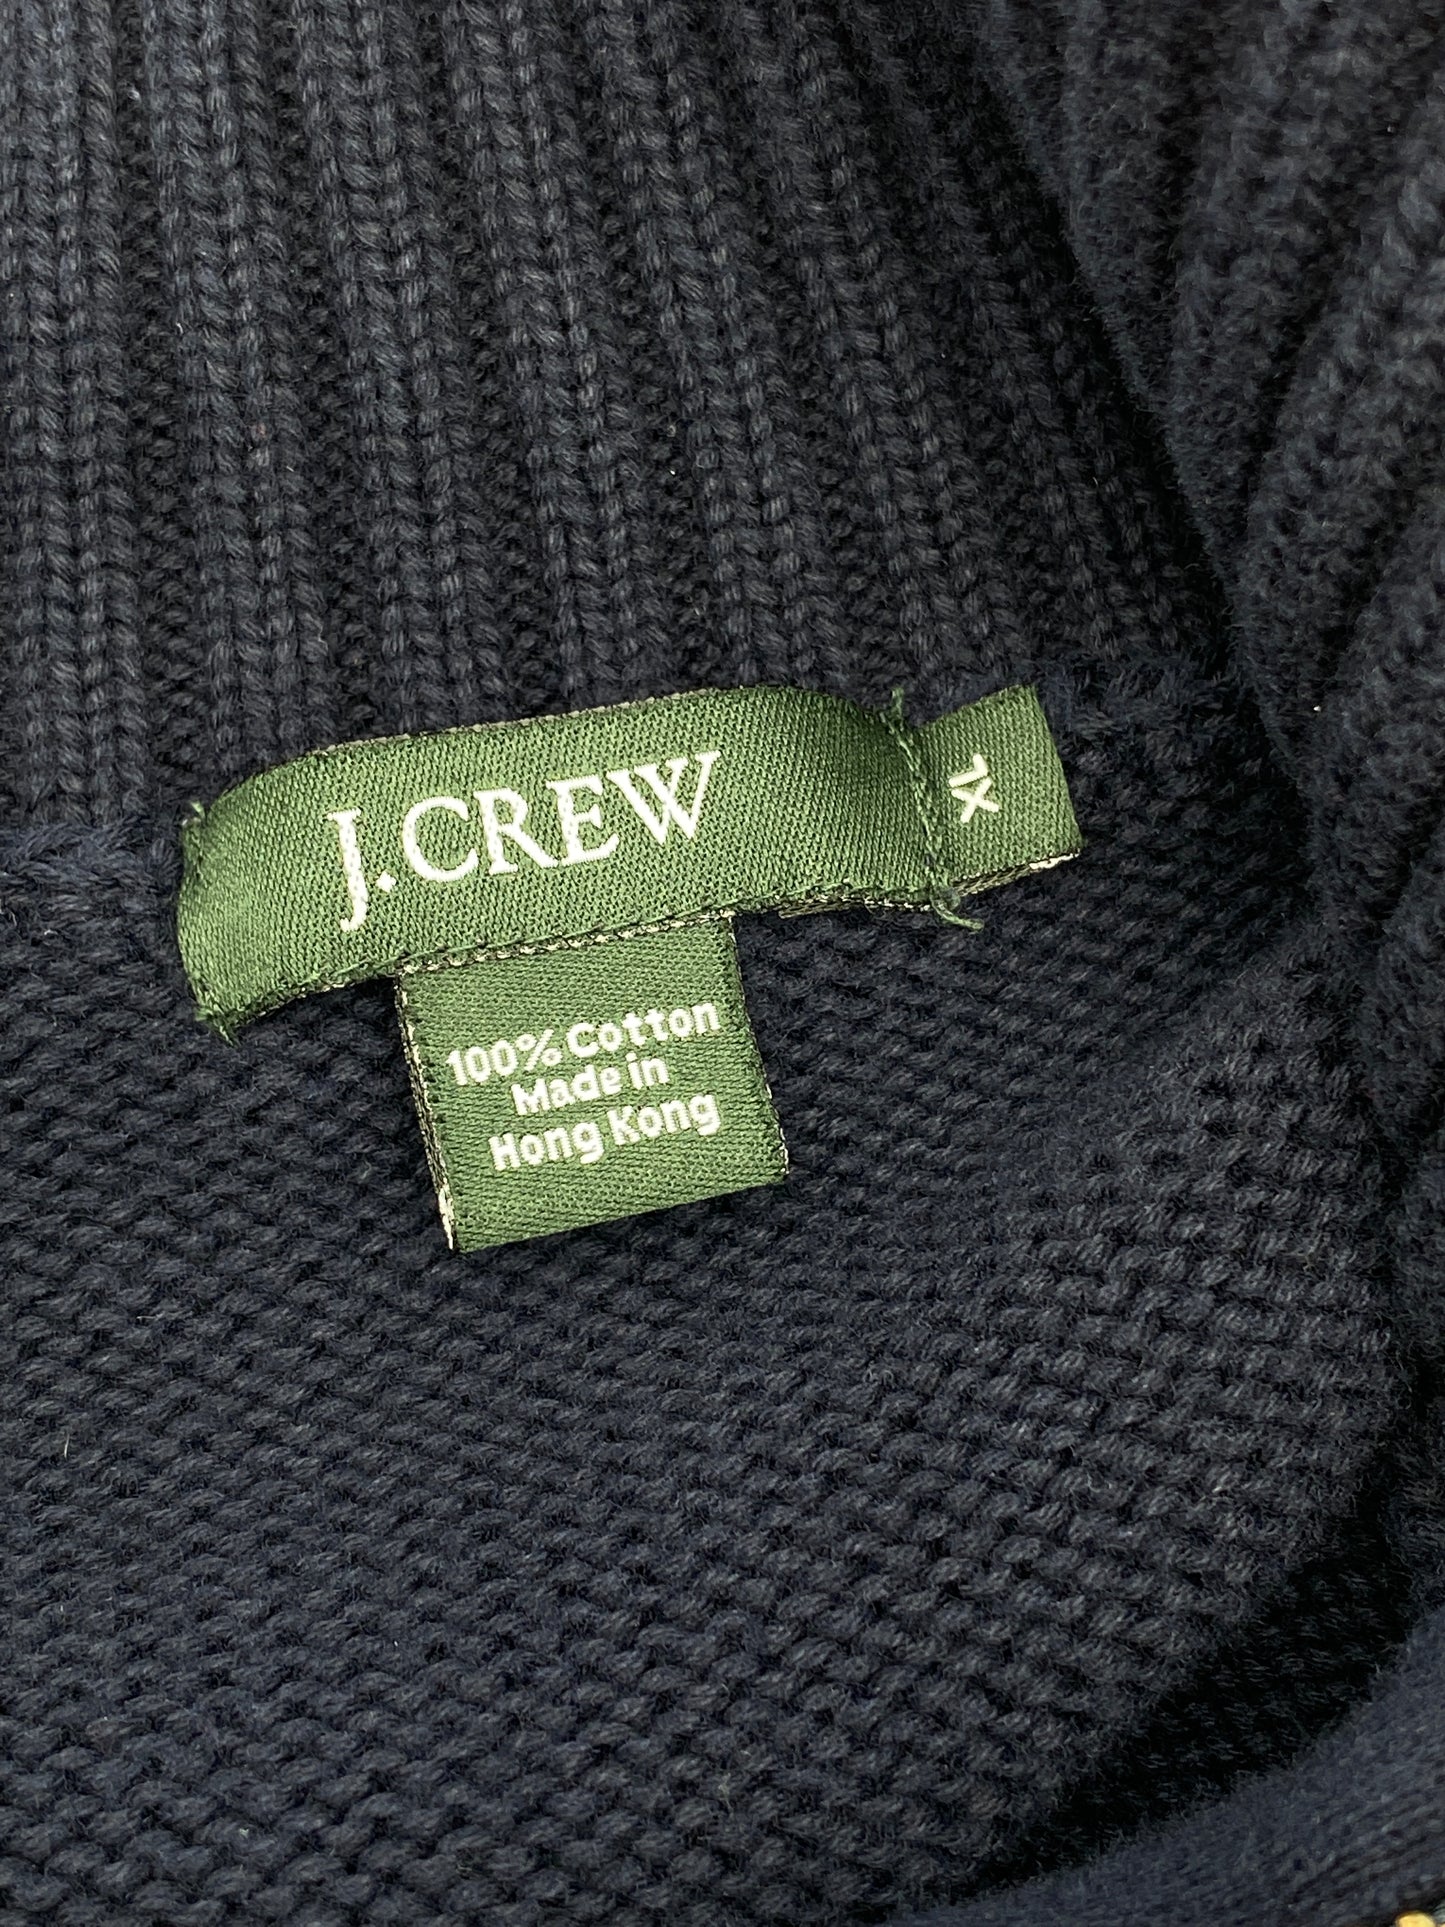 J.Crew Men's Size XL Navy Blue Full-Zip Sweater